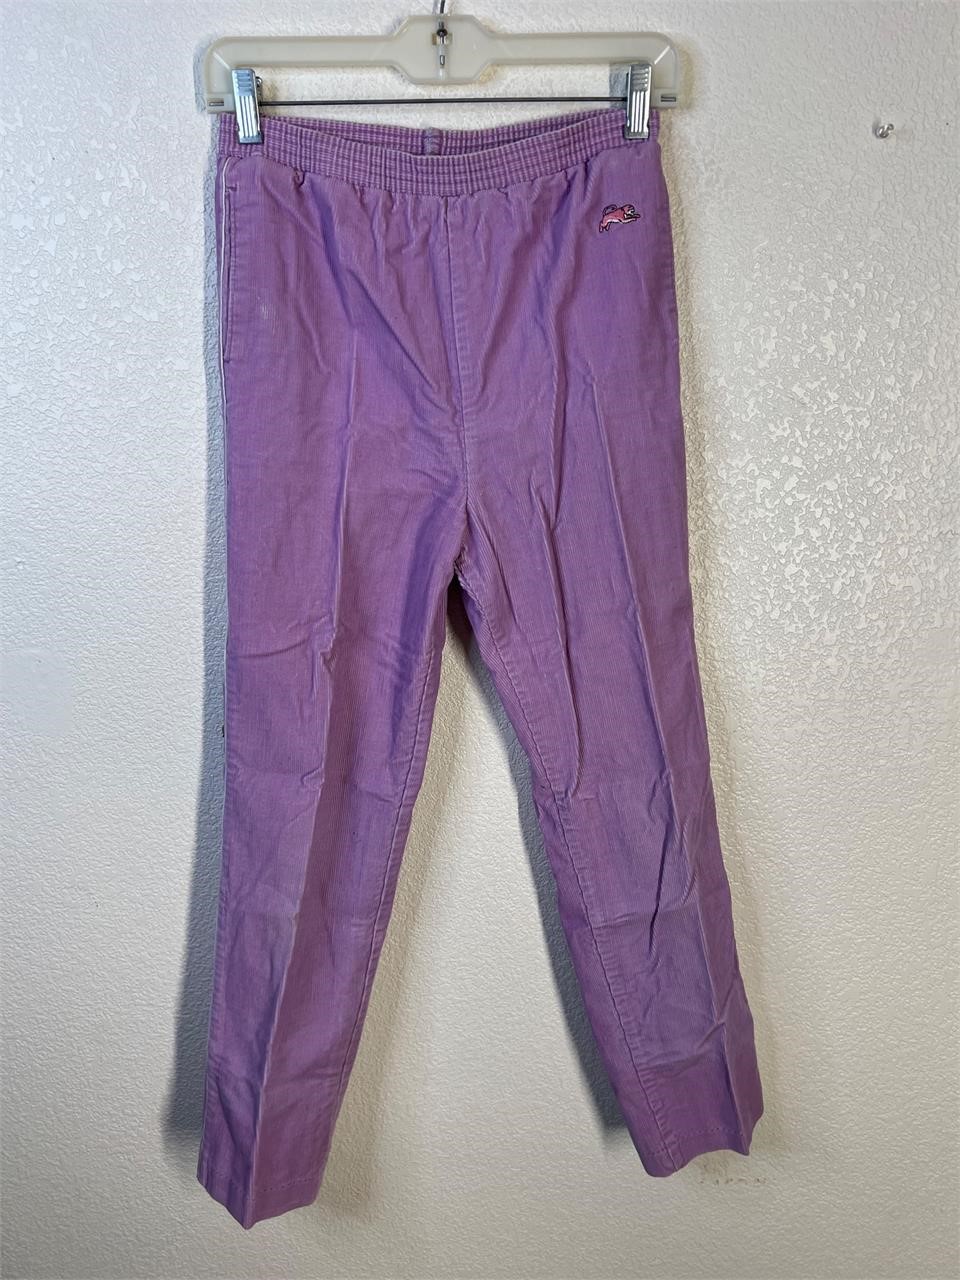 Vintage Garan Purple Corduroy Pants